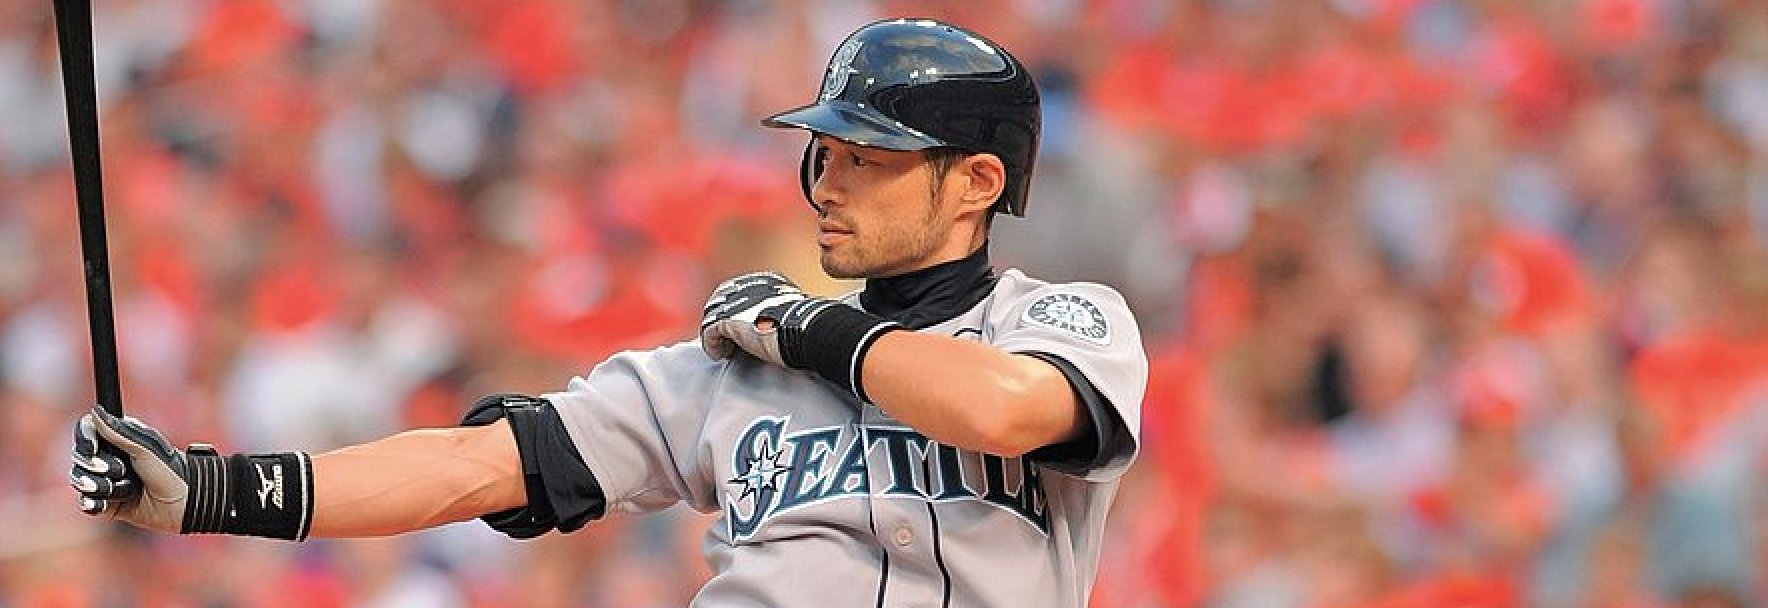 2007: When Ichiro Was the All-Star Game MVP